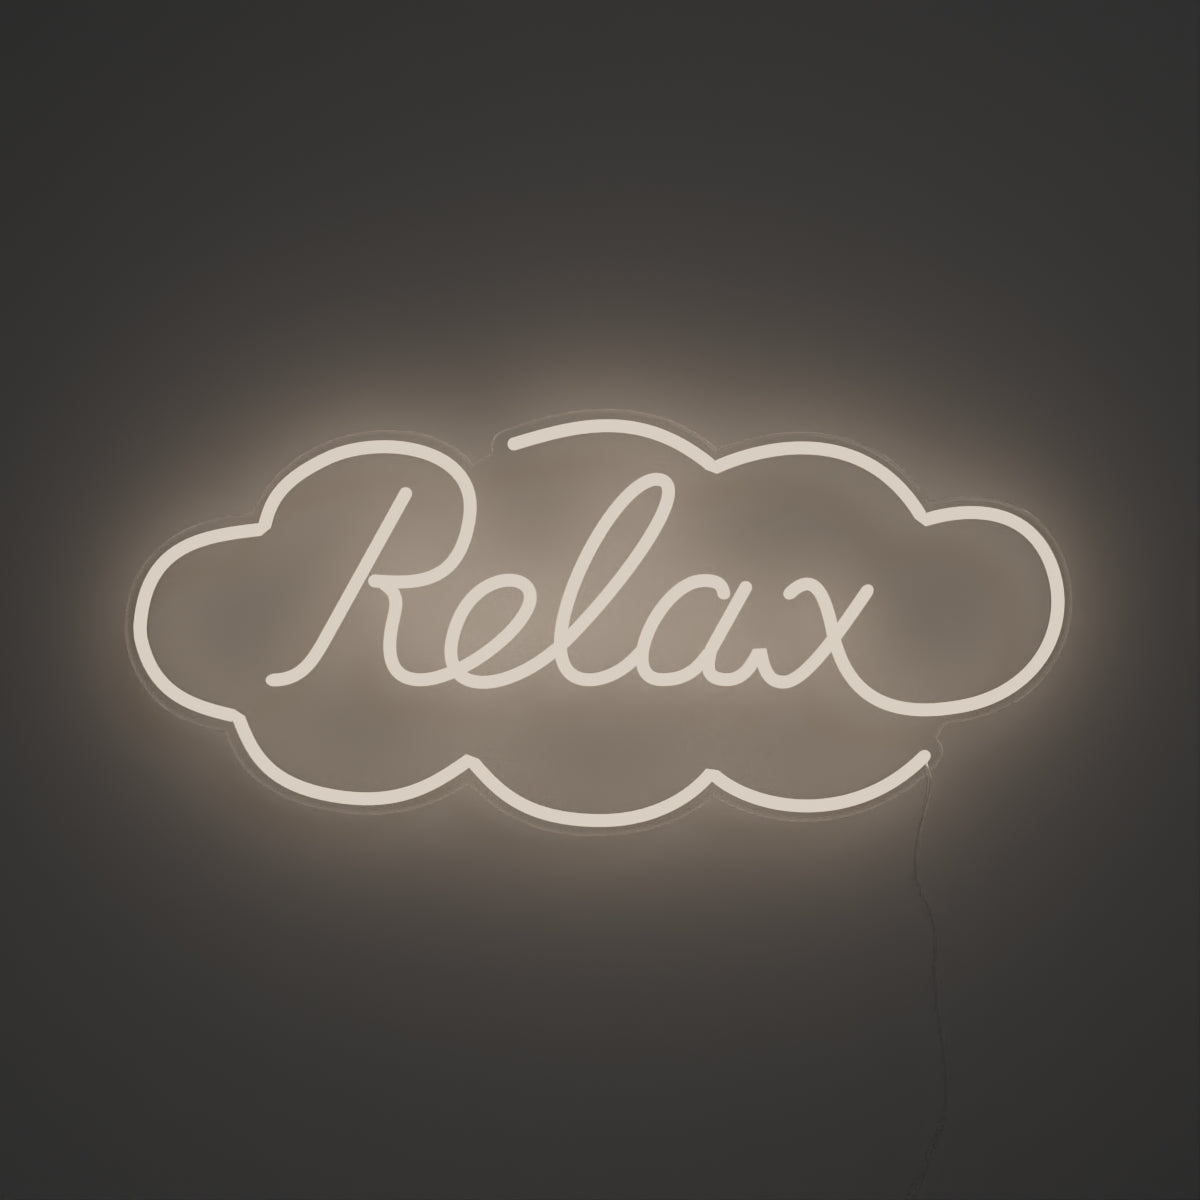 Relax by Ceizer, Neon Tabela - Neonbir